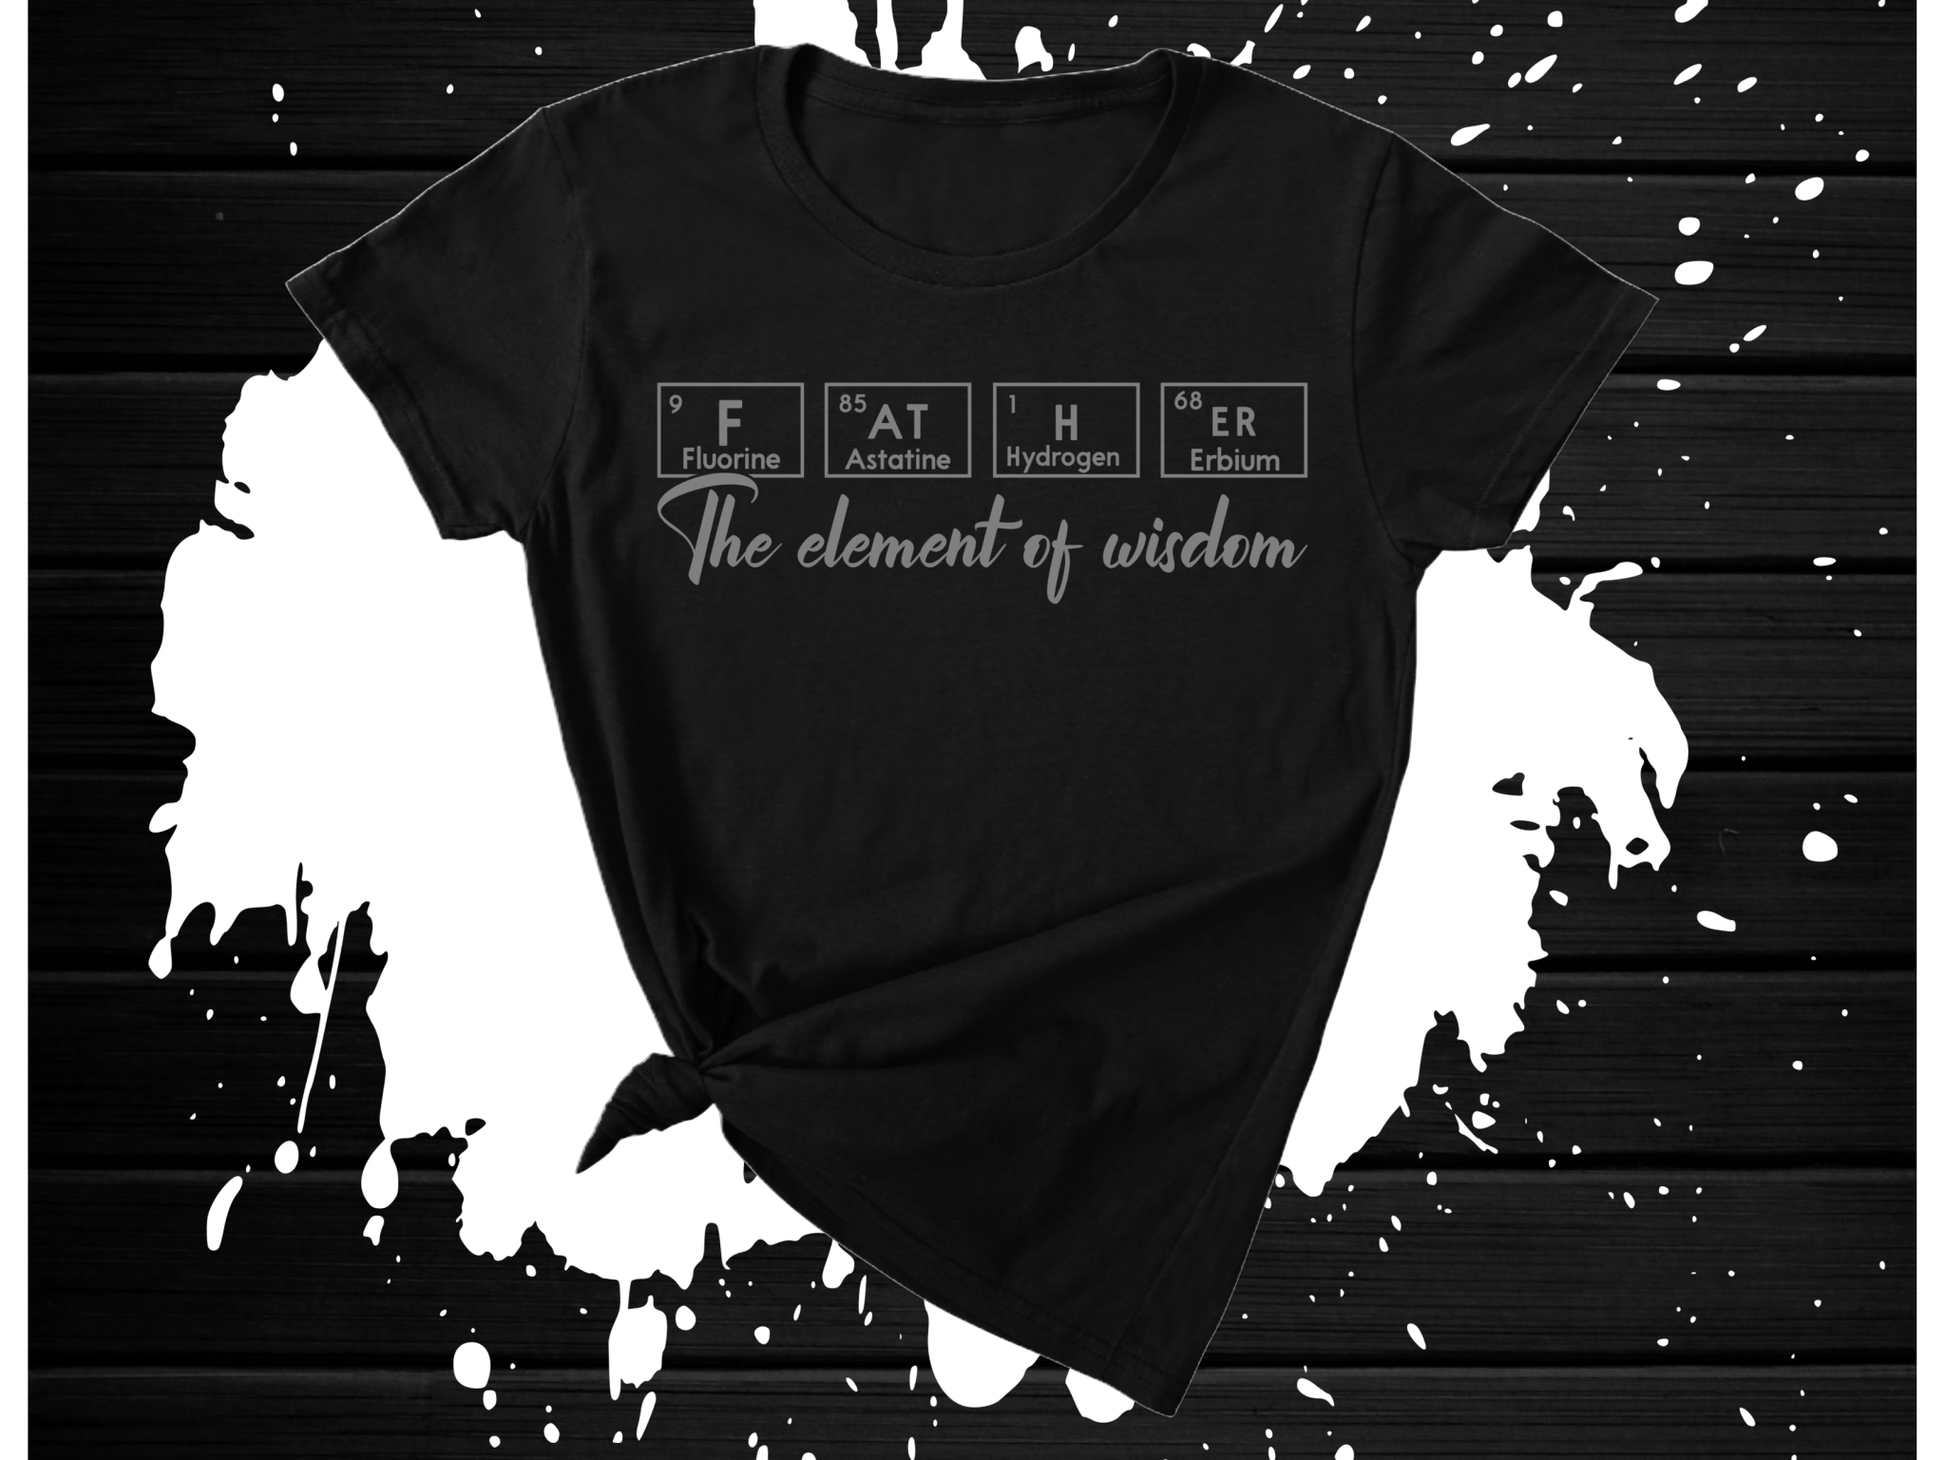 Father the element of wisdom shirt - smuniqueshirts